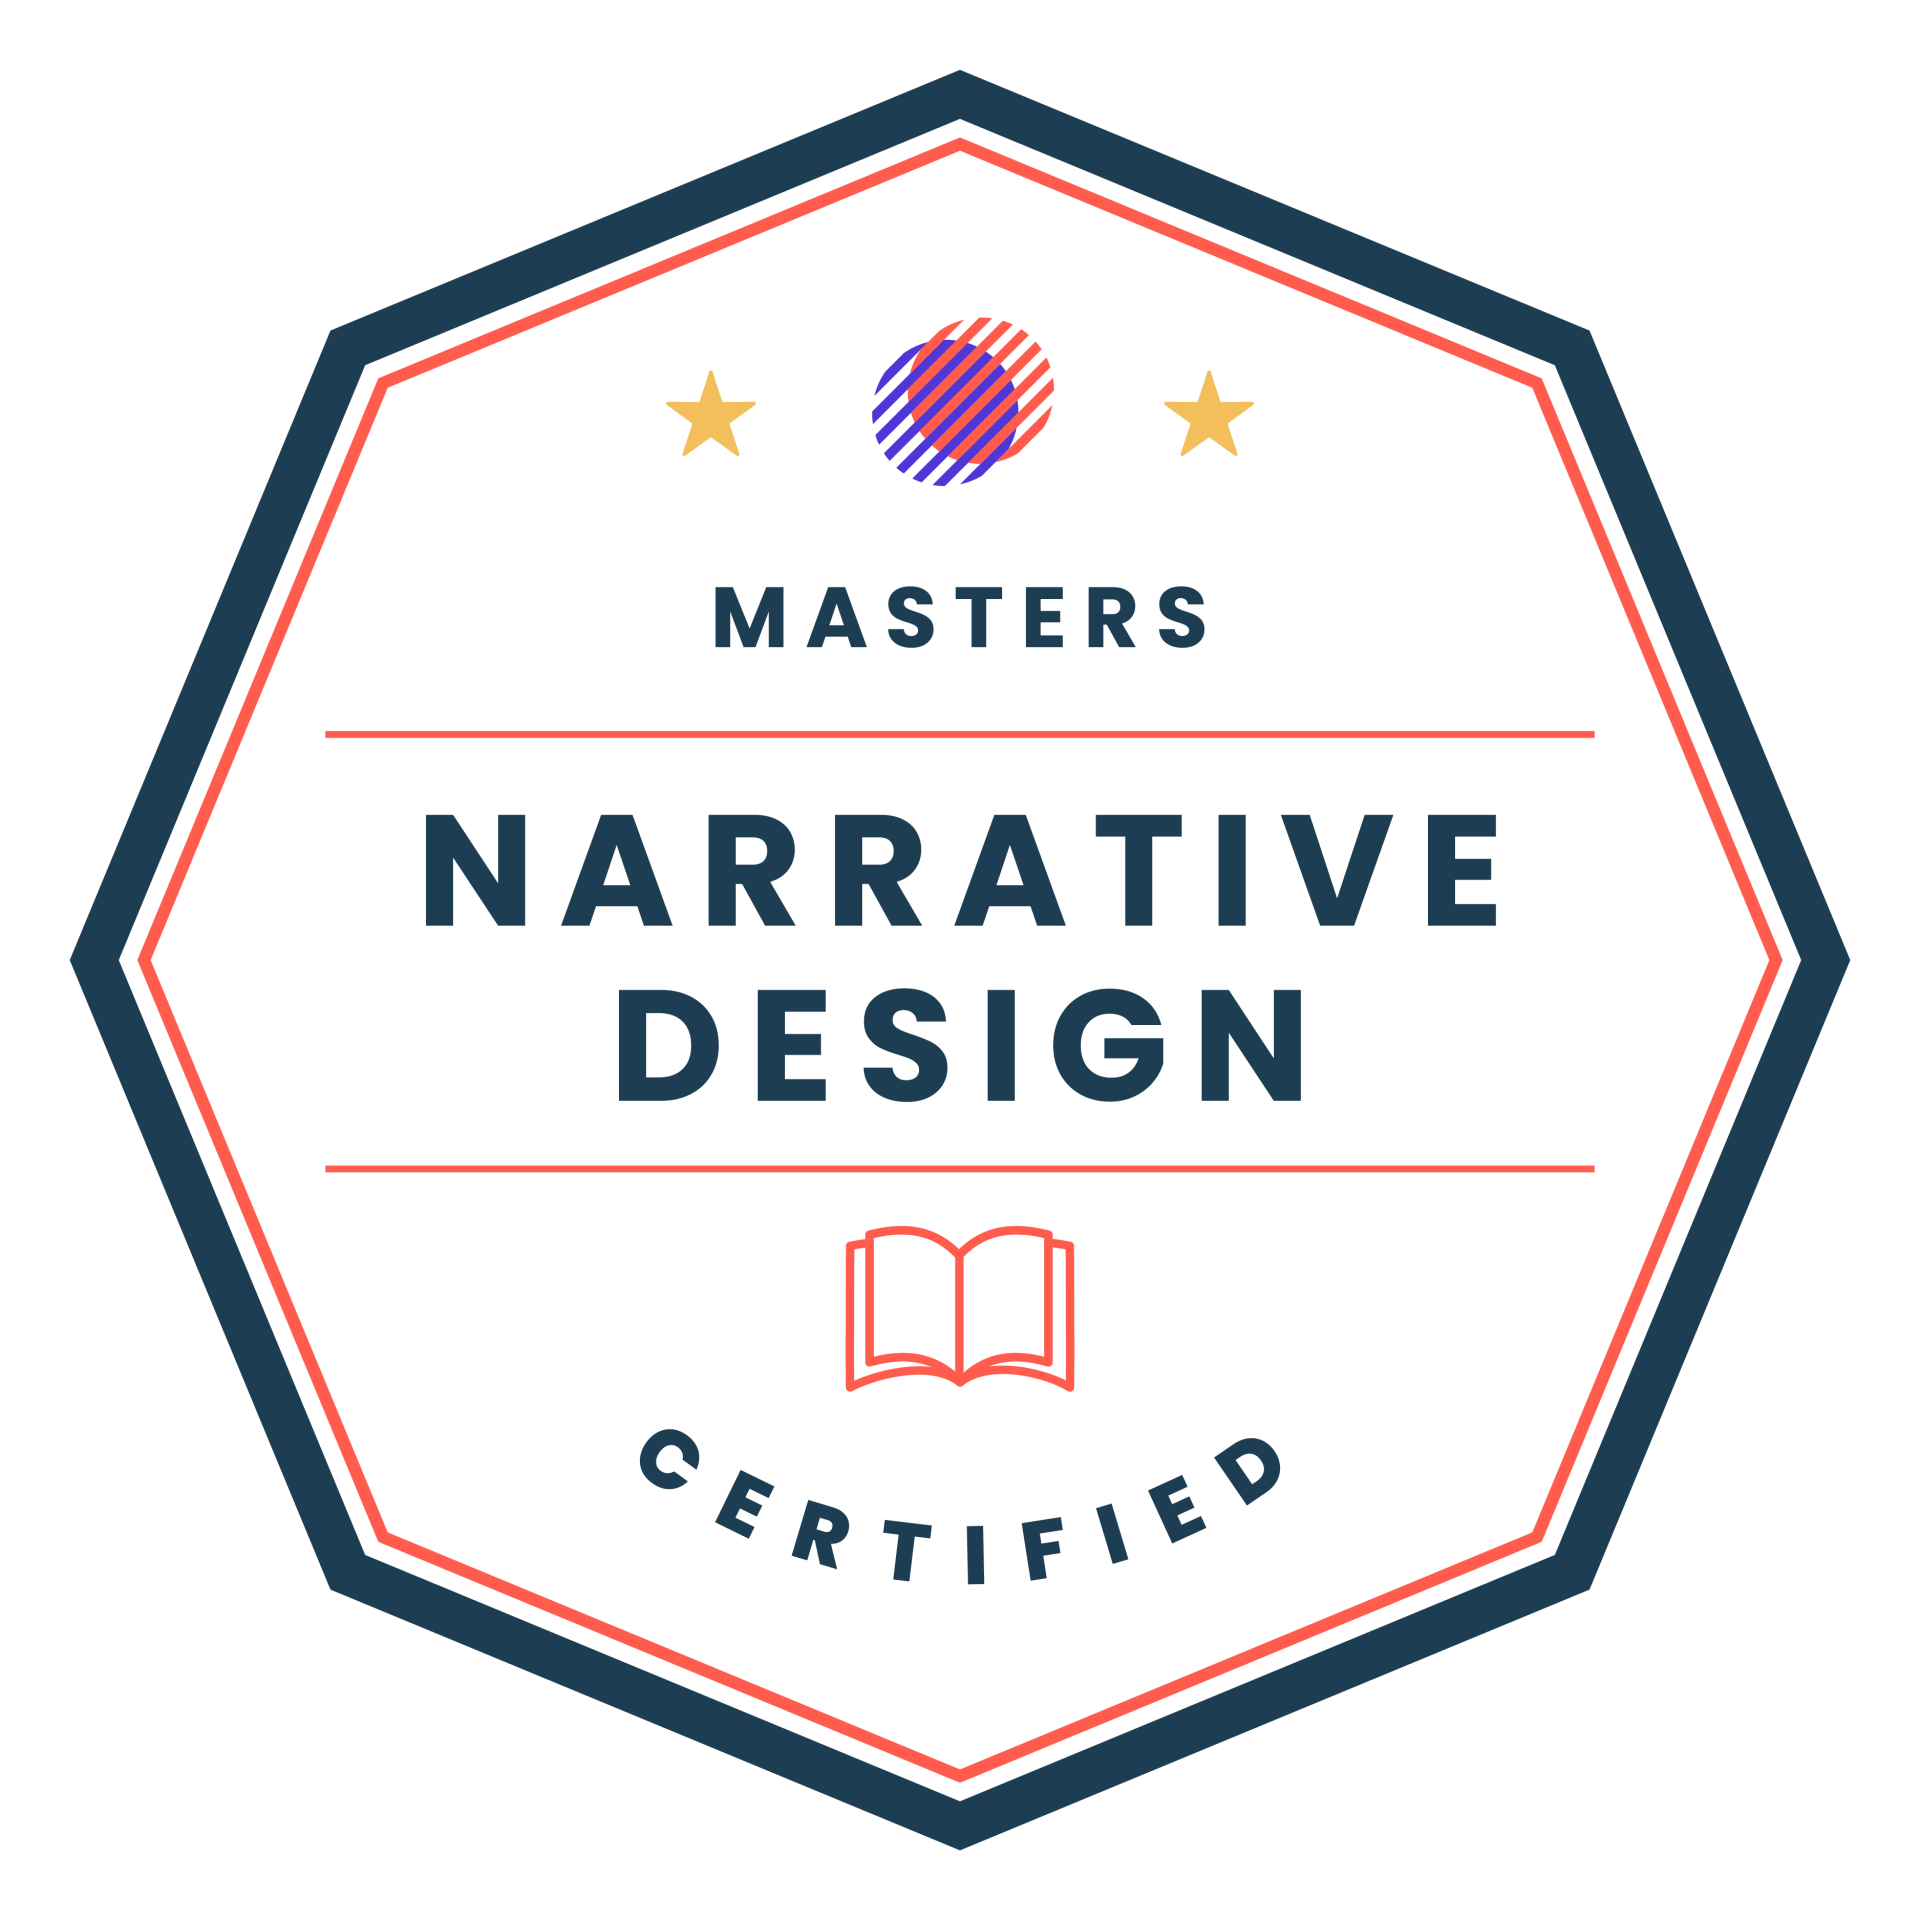 Narrative Design Certified | Masters badge